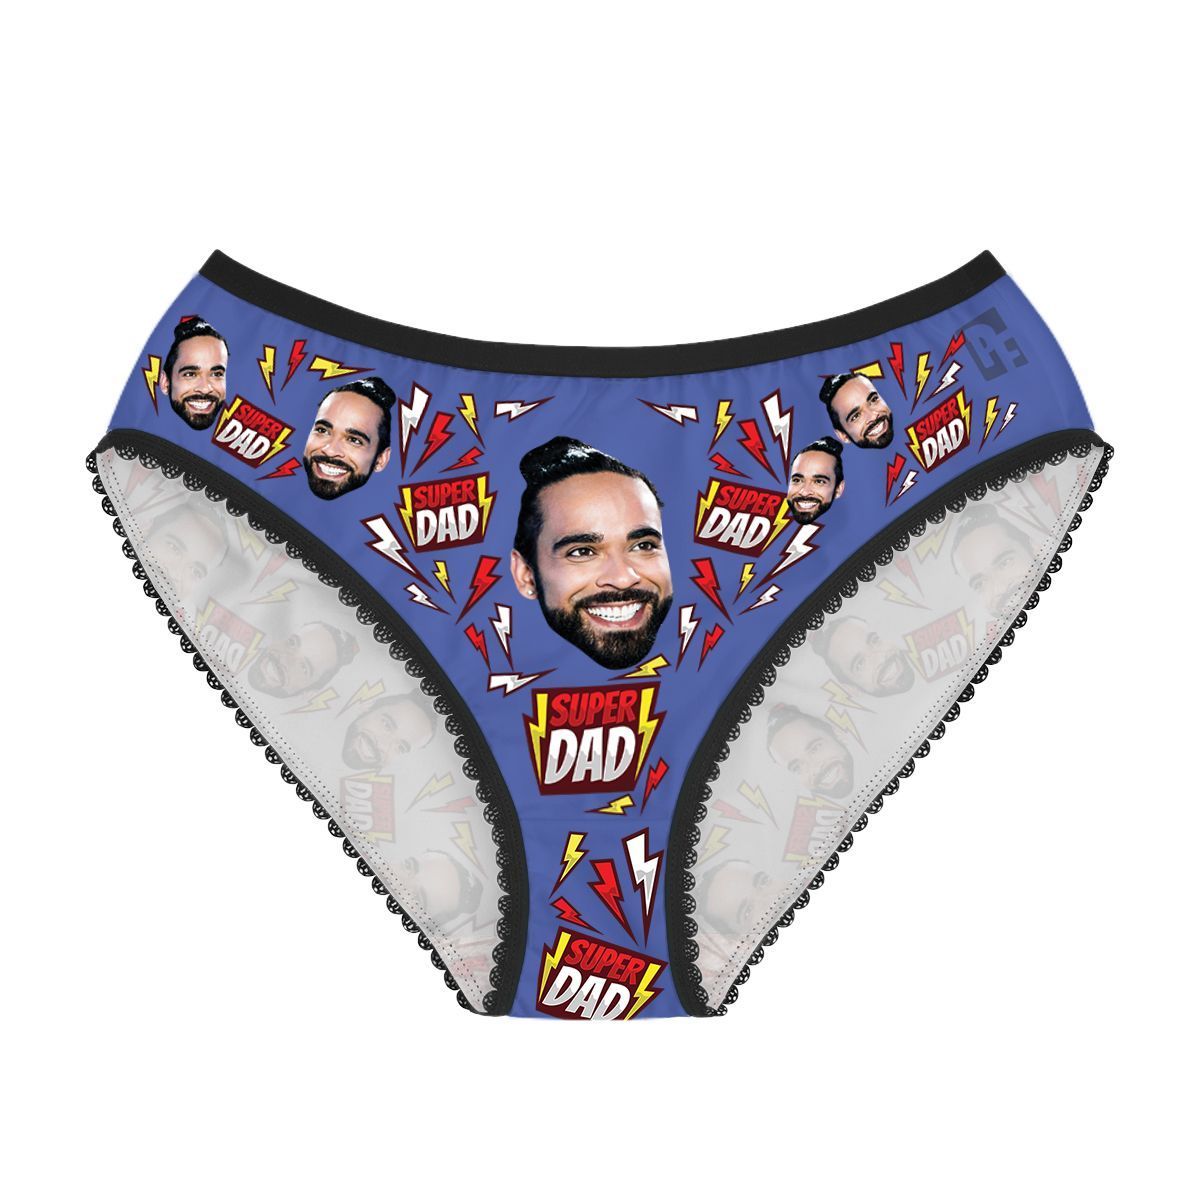 Darkblue Super dad women's underwear briefs personalized with photo printed on them